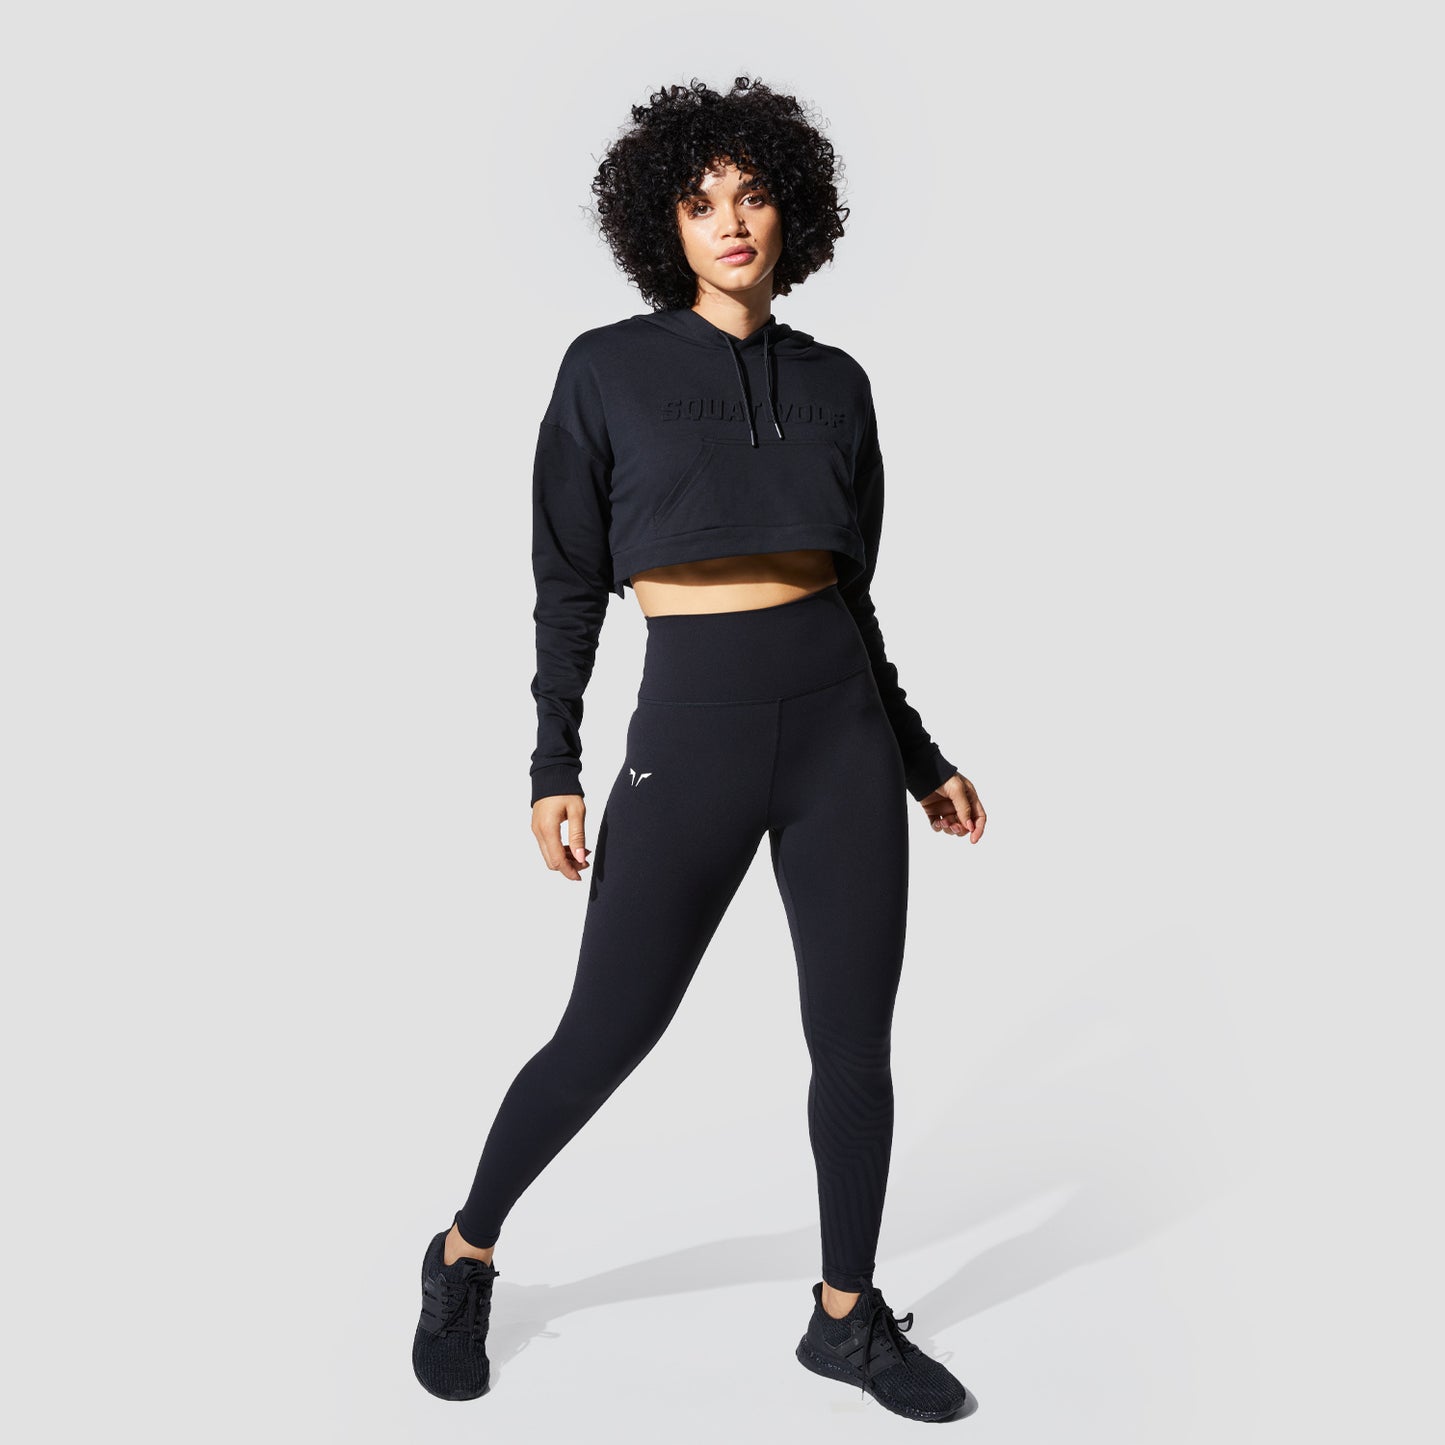 squatwolf-workout-clothes-graphic-wordmark-crop-hoodie-black-gym-hoodie